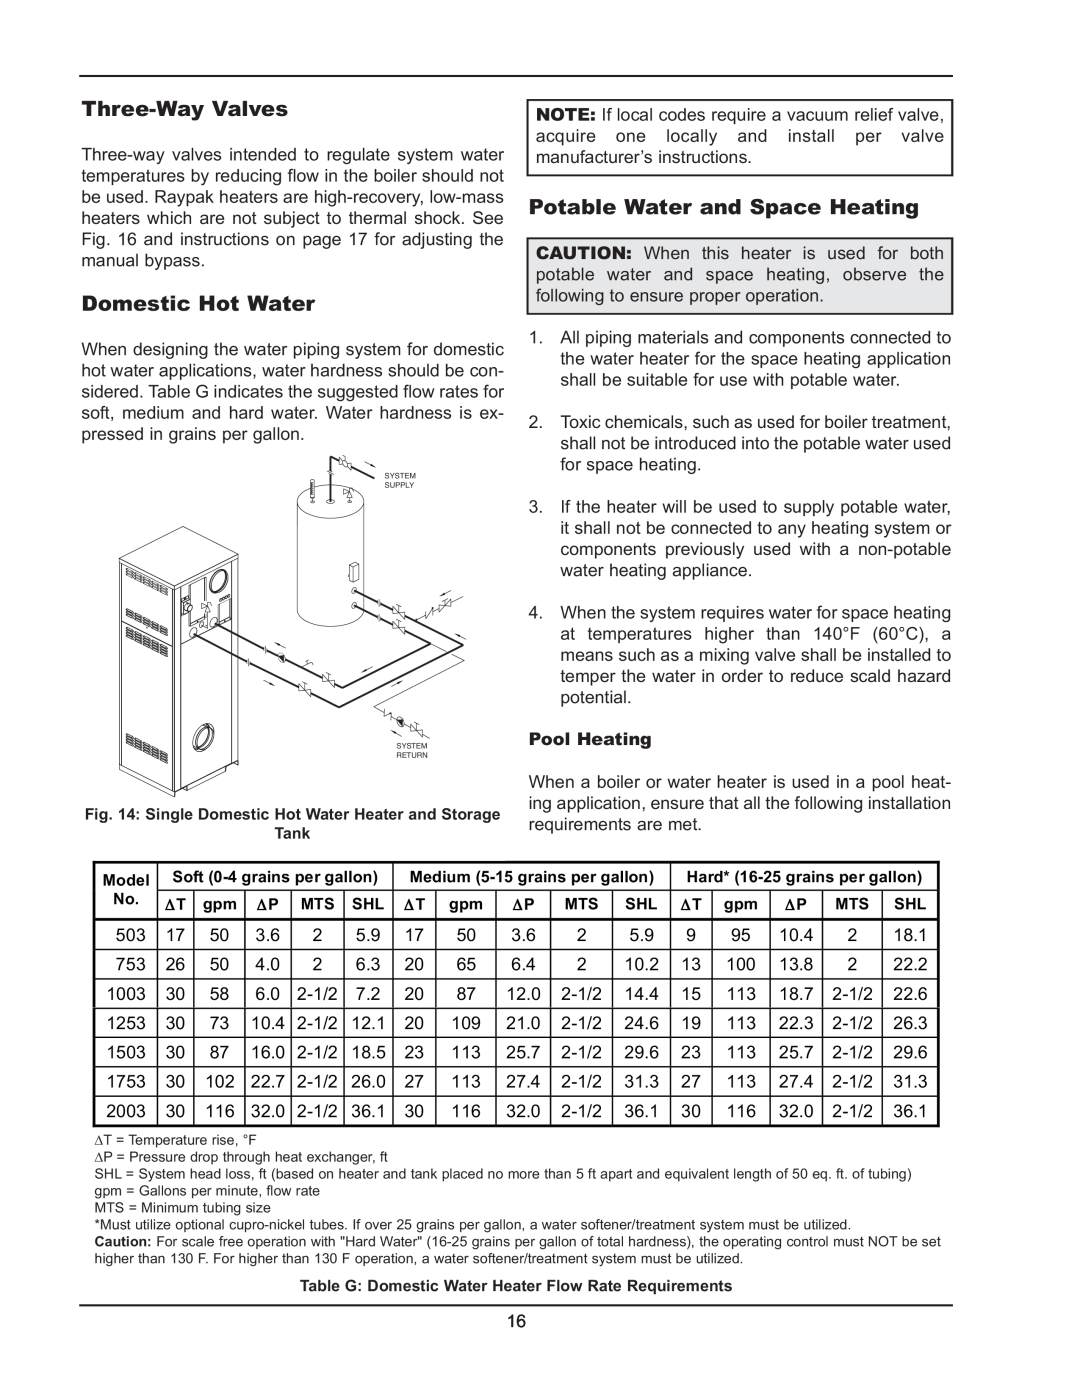 Raypak 503-2003 manual Three-WayValves, Domestic Hot Water, Potable Water and Space Heating, Pool Heating 